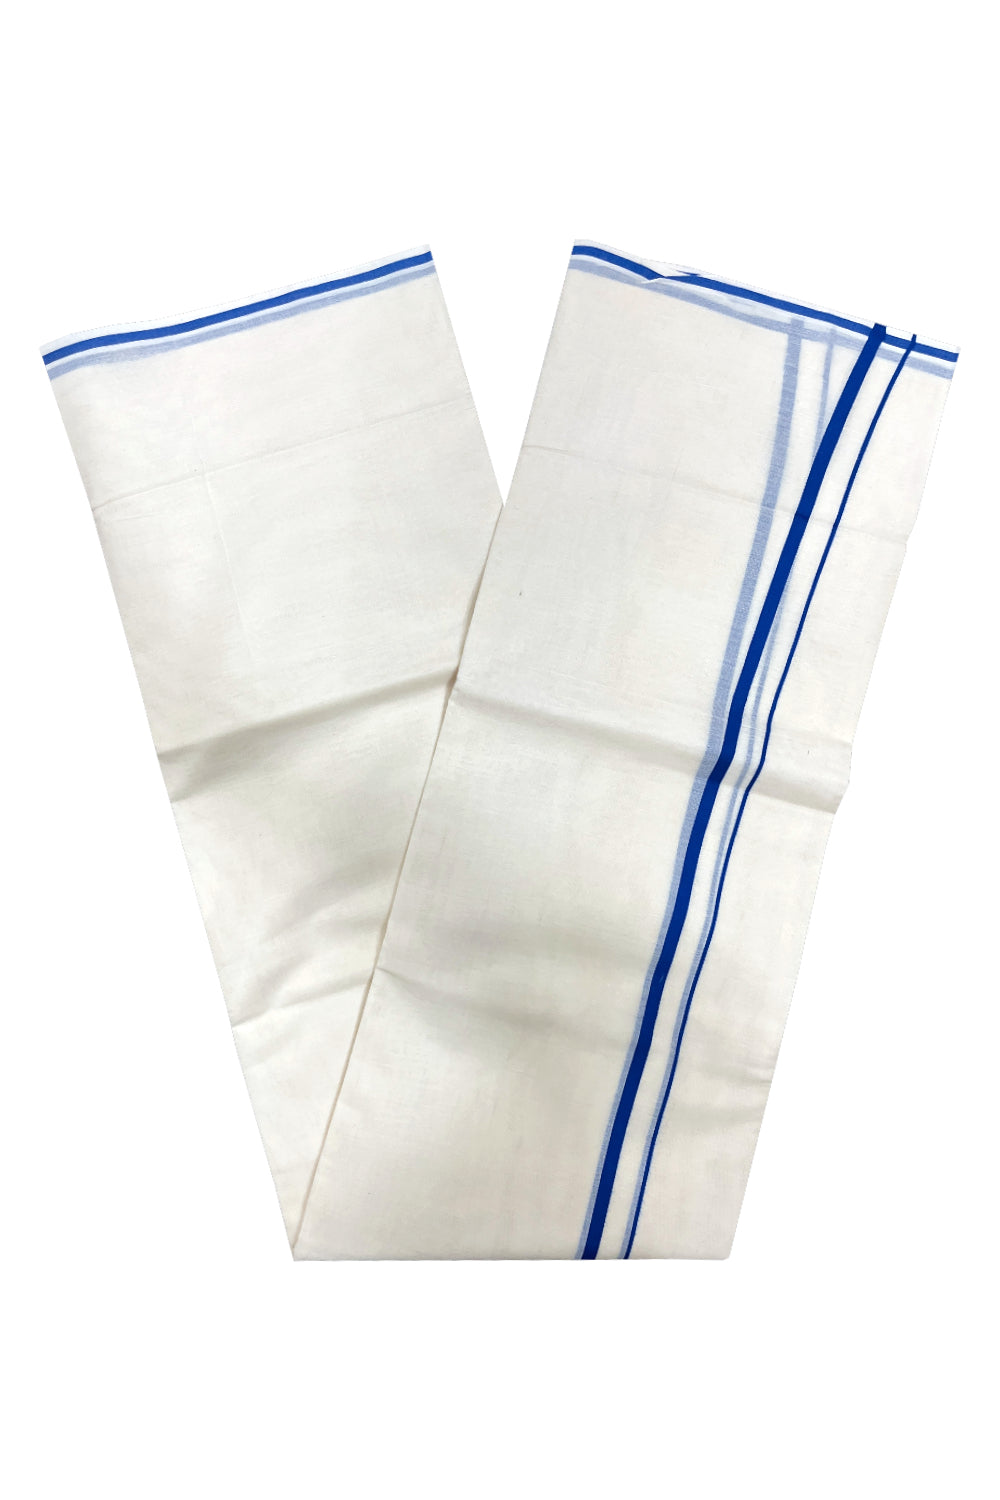 Pure Cotton Double Mundu with 0.5 inch Blue Border (South Indian Kerala Dhoti)